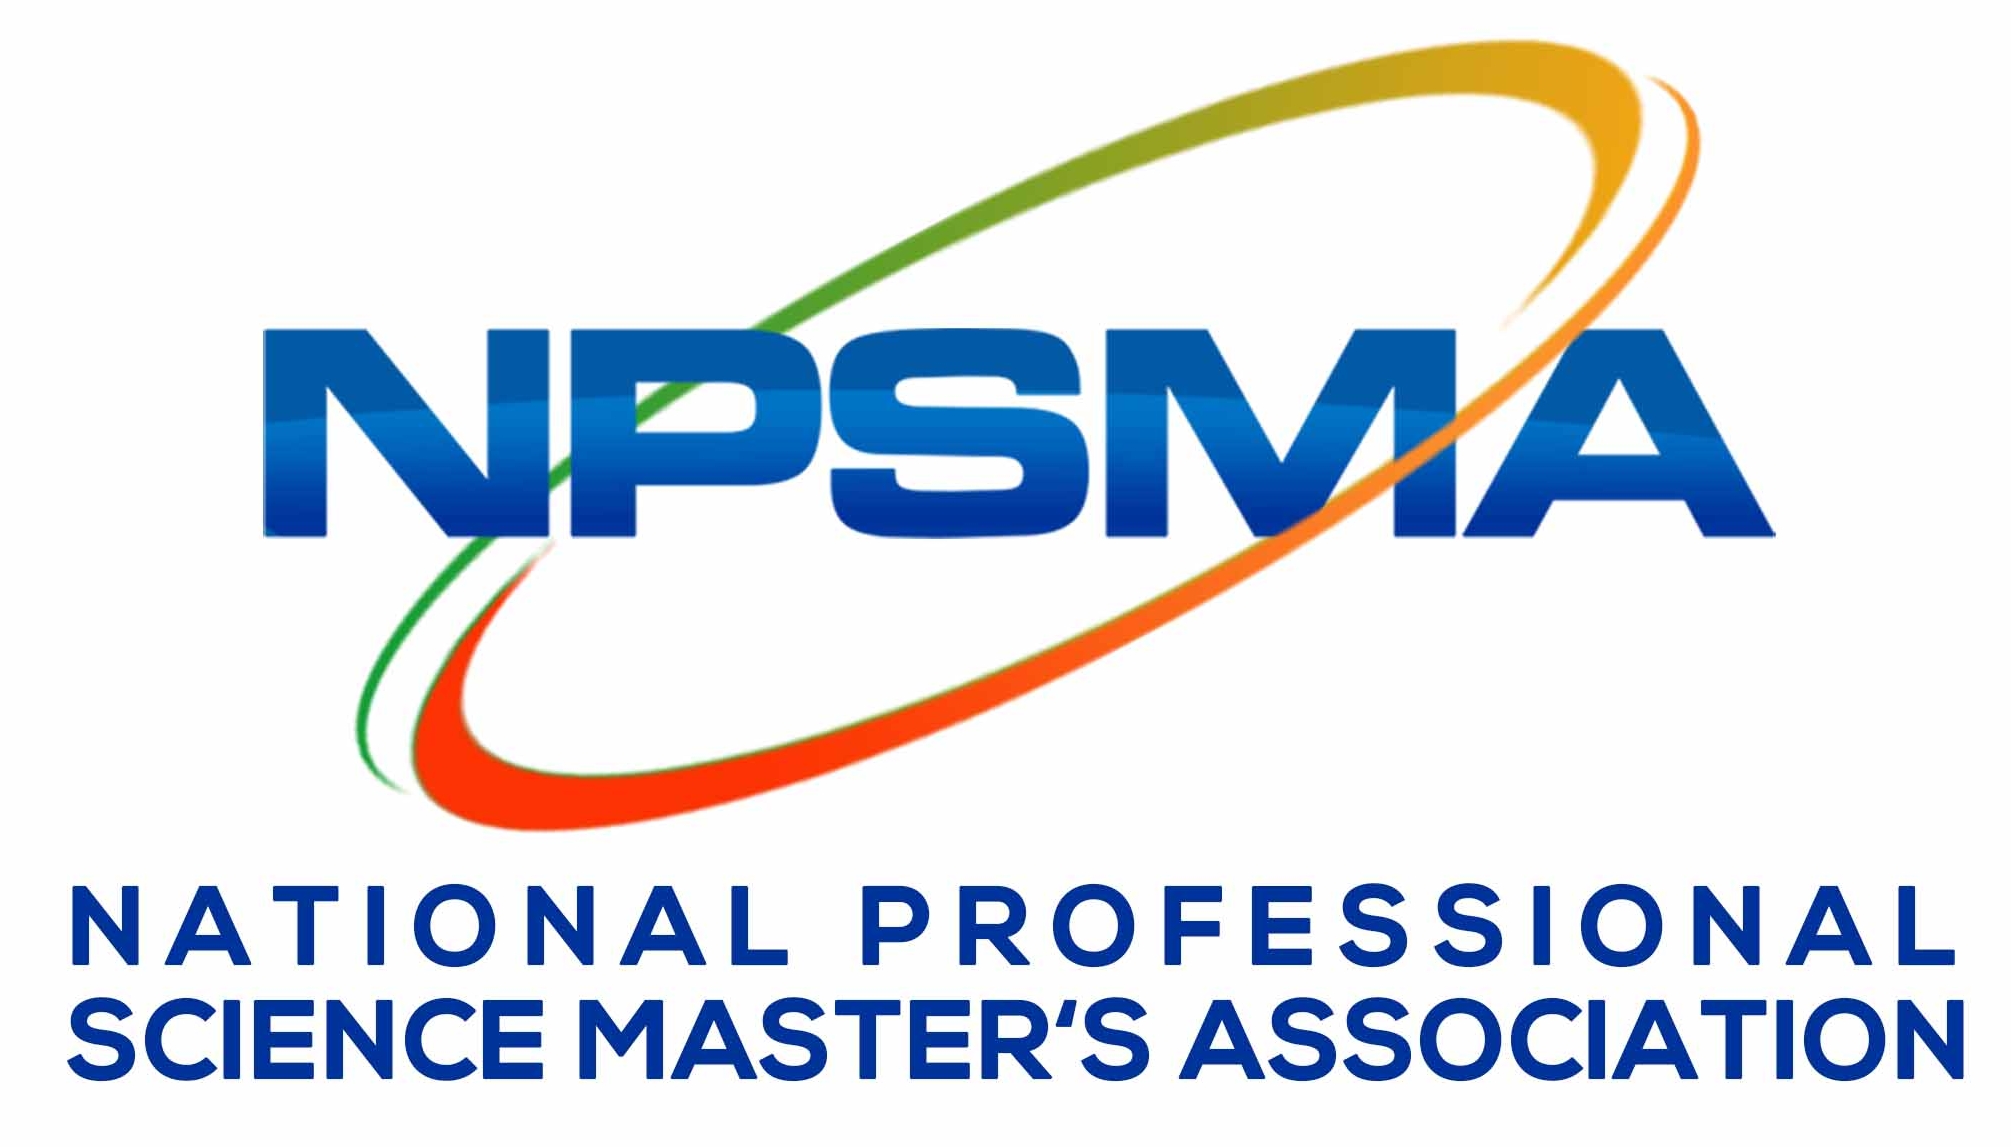 National Professional Science Master's Association logo